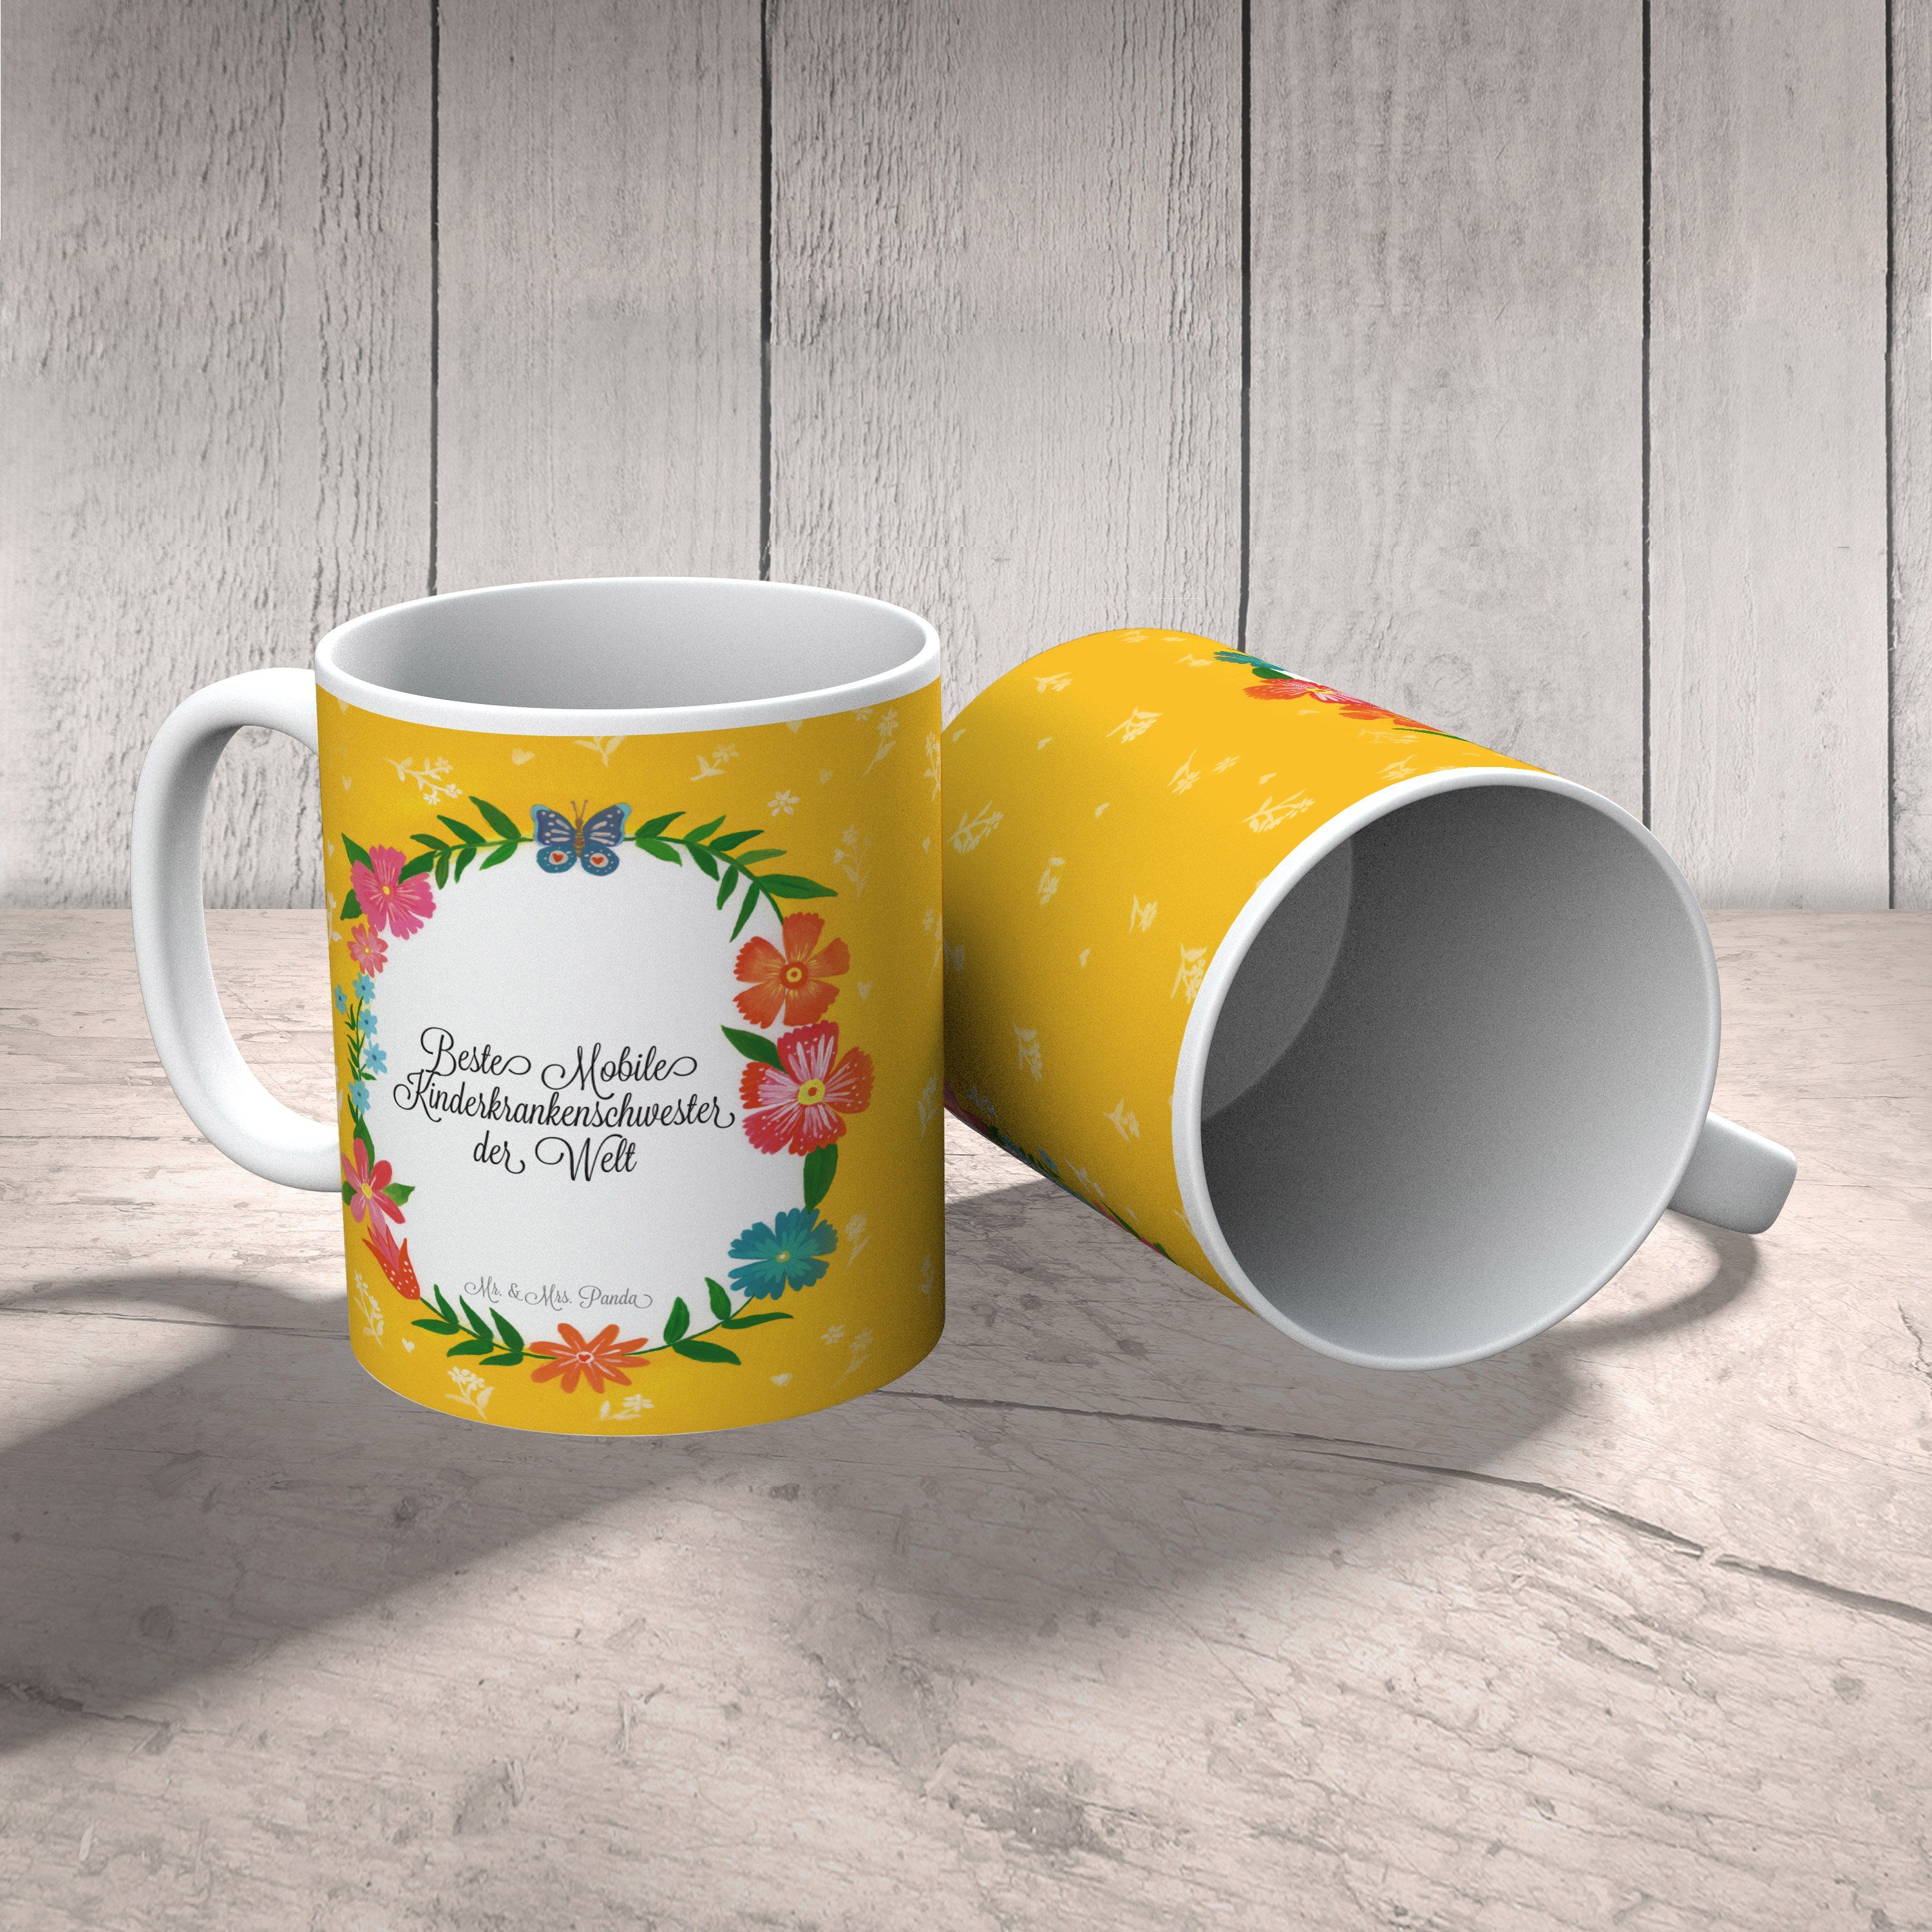 - Mr. Kaffeetasse, Ausbildung, Geschenk, & Mrs. Kinderkrankenschwester Tasse Panda Mobile Keramik Ab,